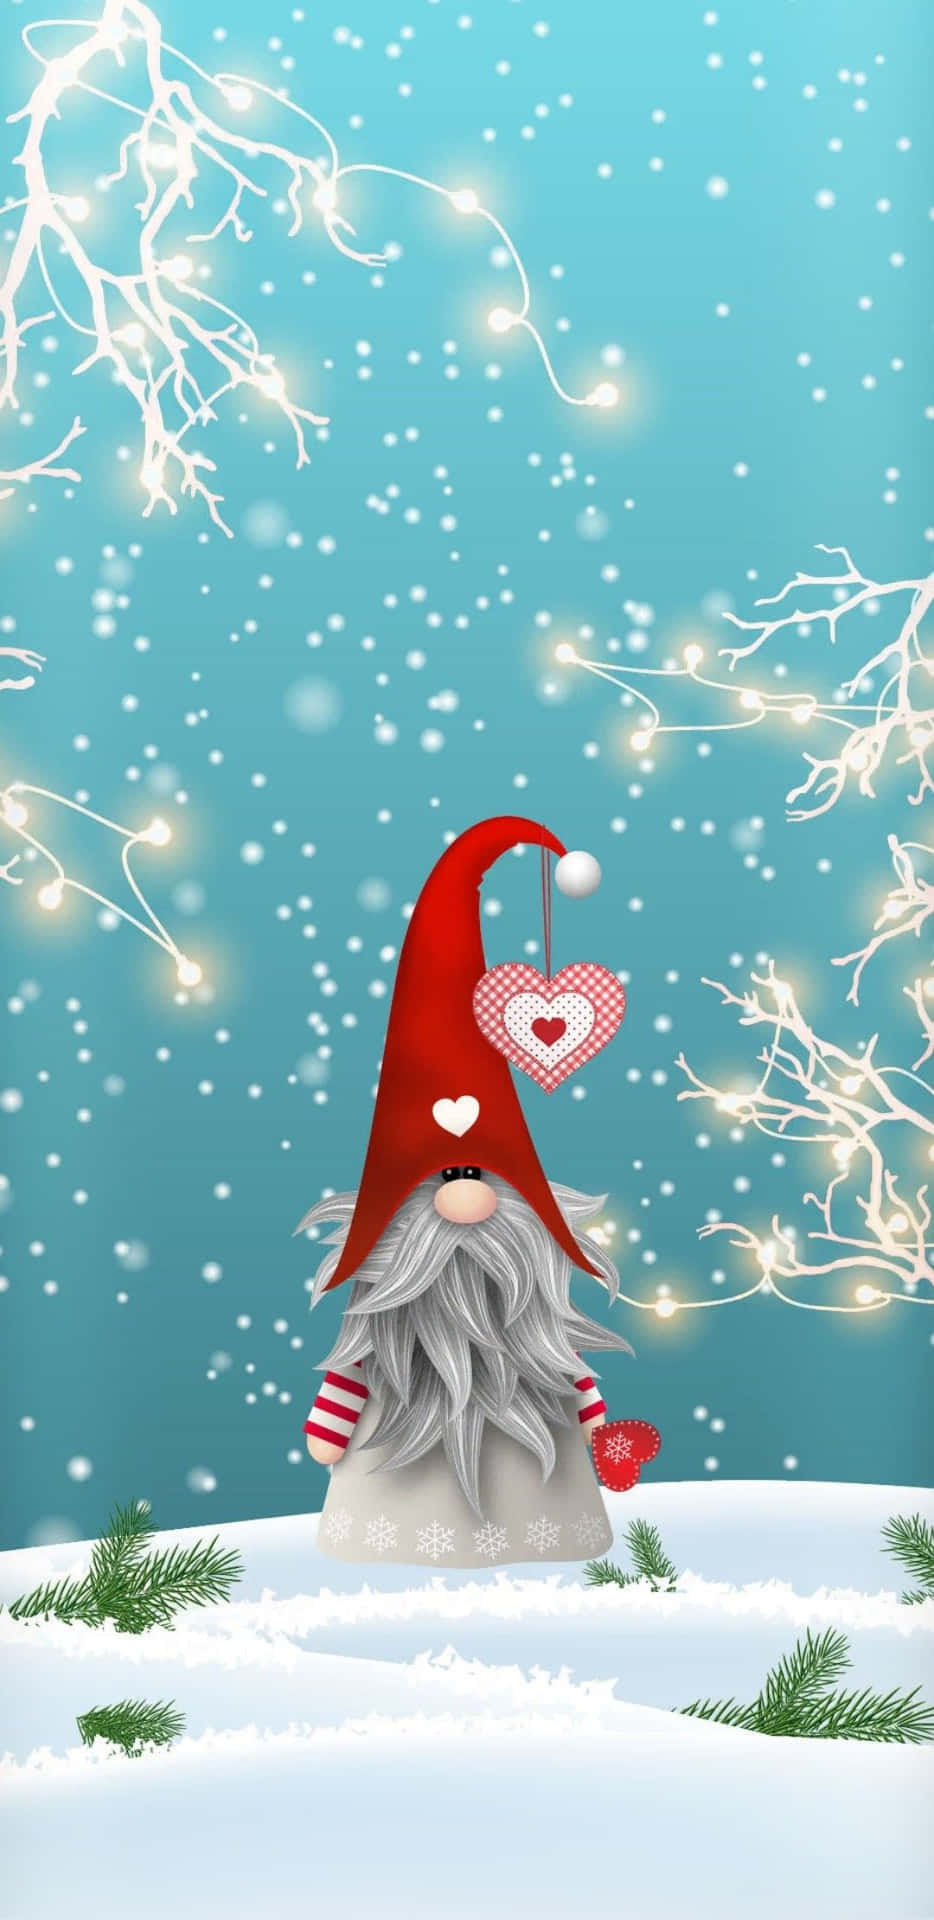 Joyful Christmas gnome sitting in the snow Wallpaper